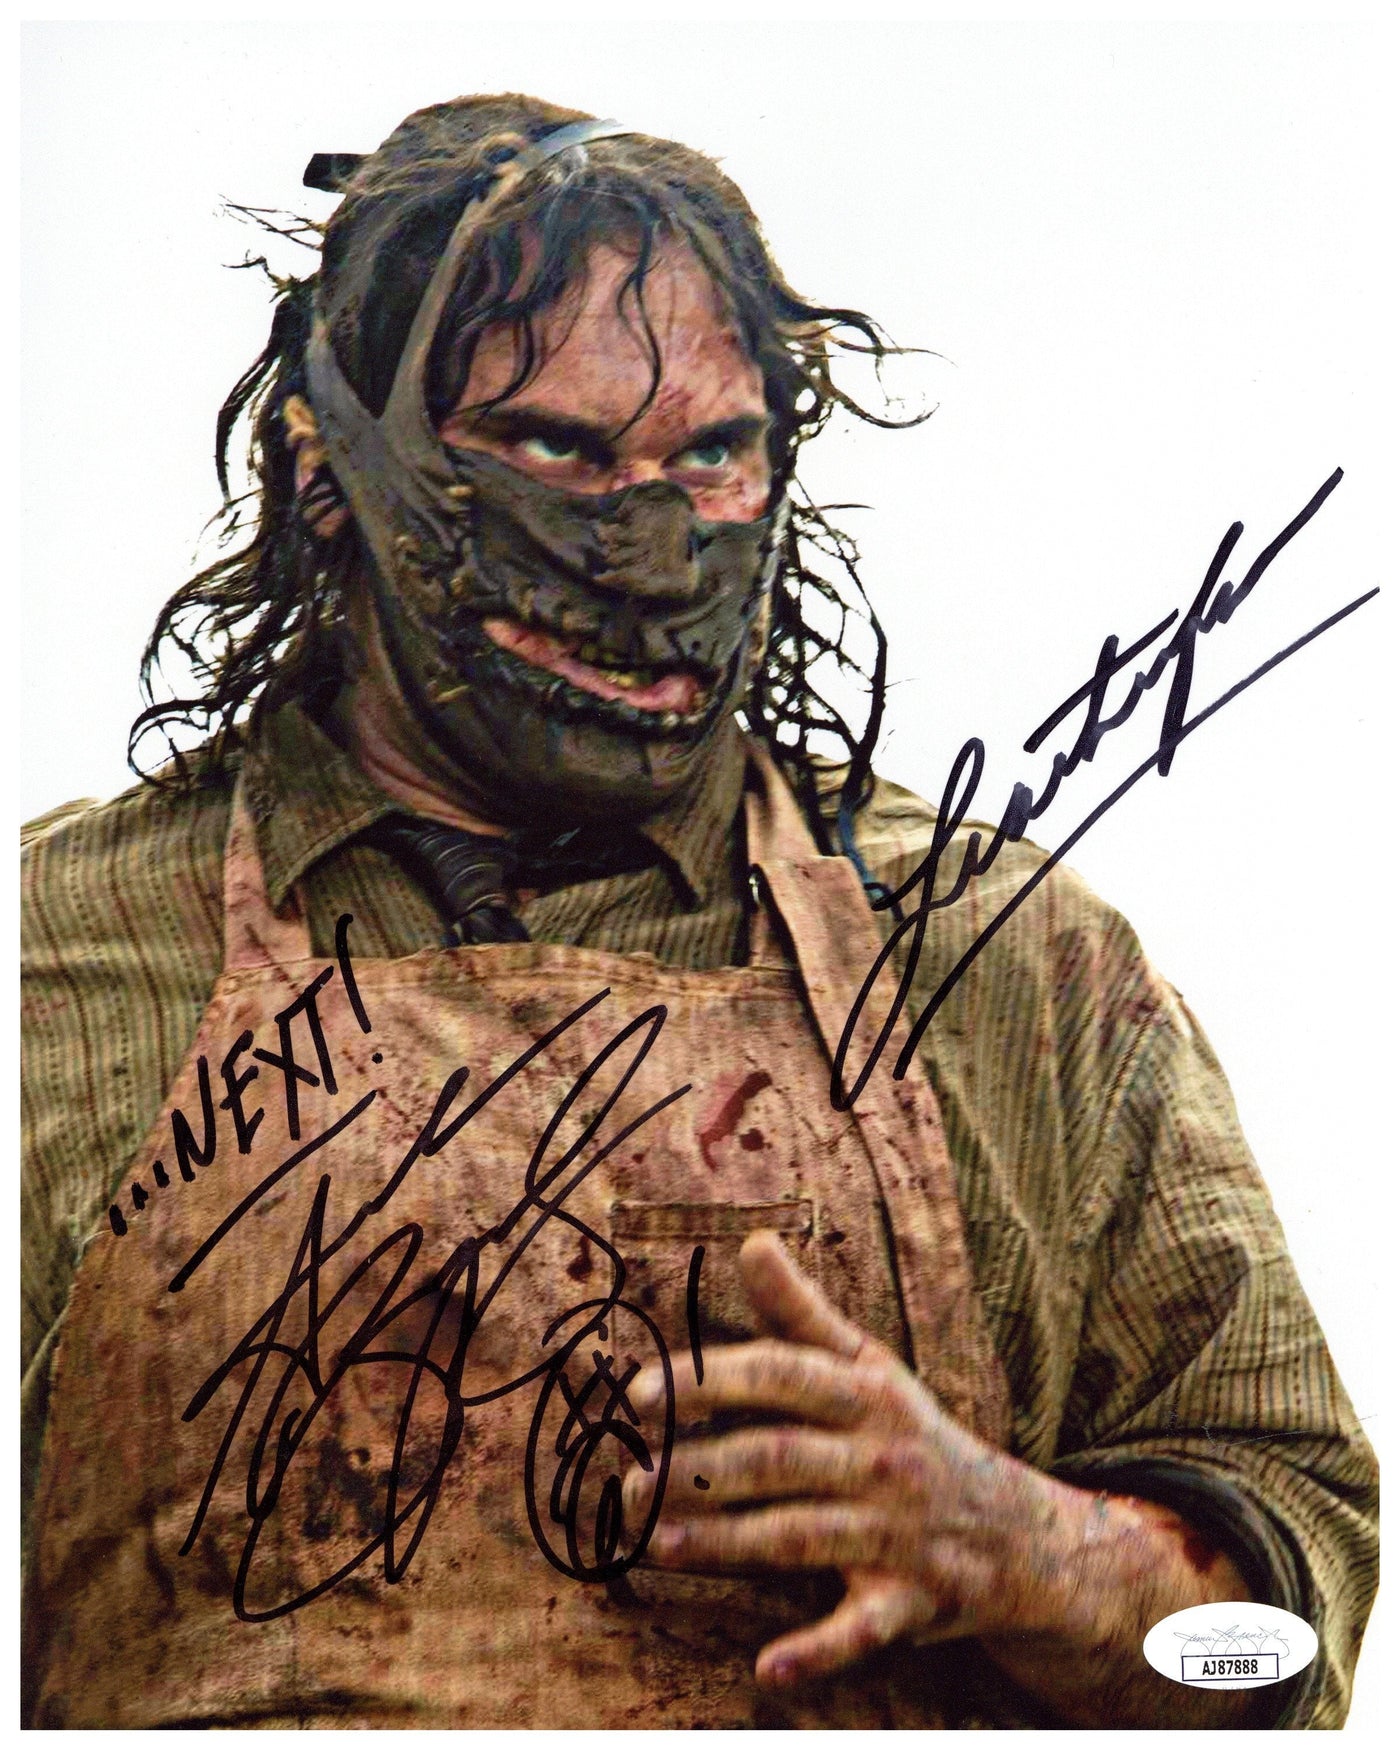 Andrew Bryniarski Signed 8x10 Photo Texas Chainsaw Massacre Leatherface Auto JSA